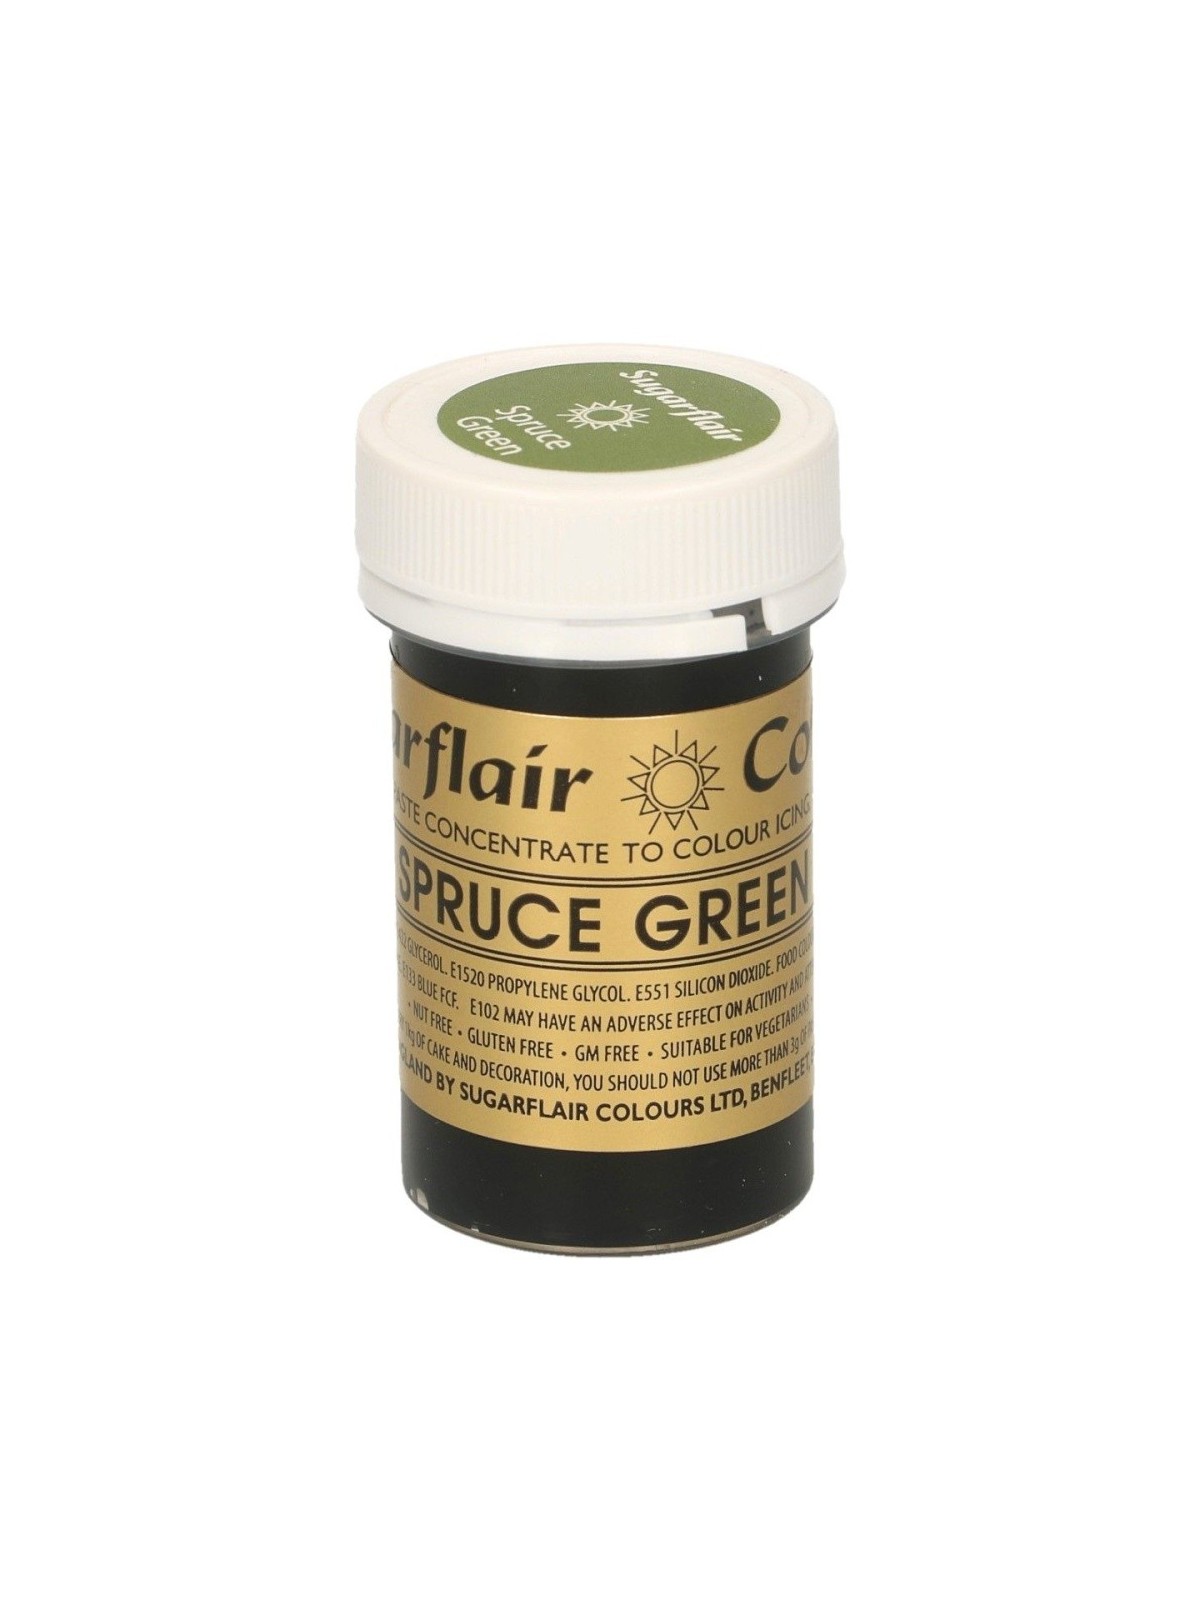 Sugarlair gelová barva - smrkově zelená - Spruce Green